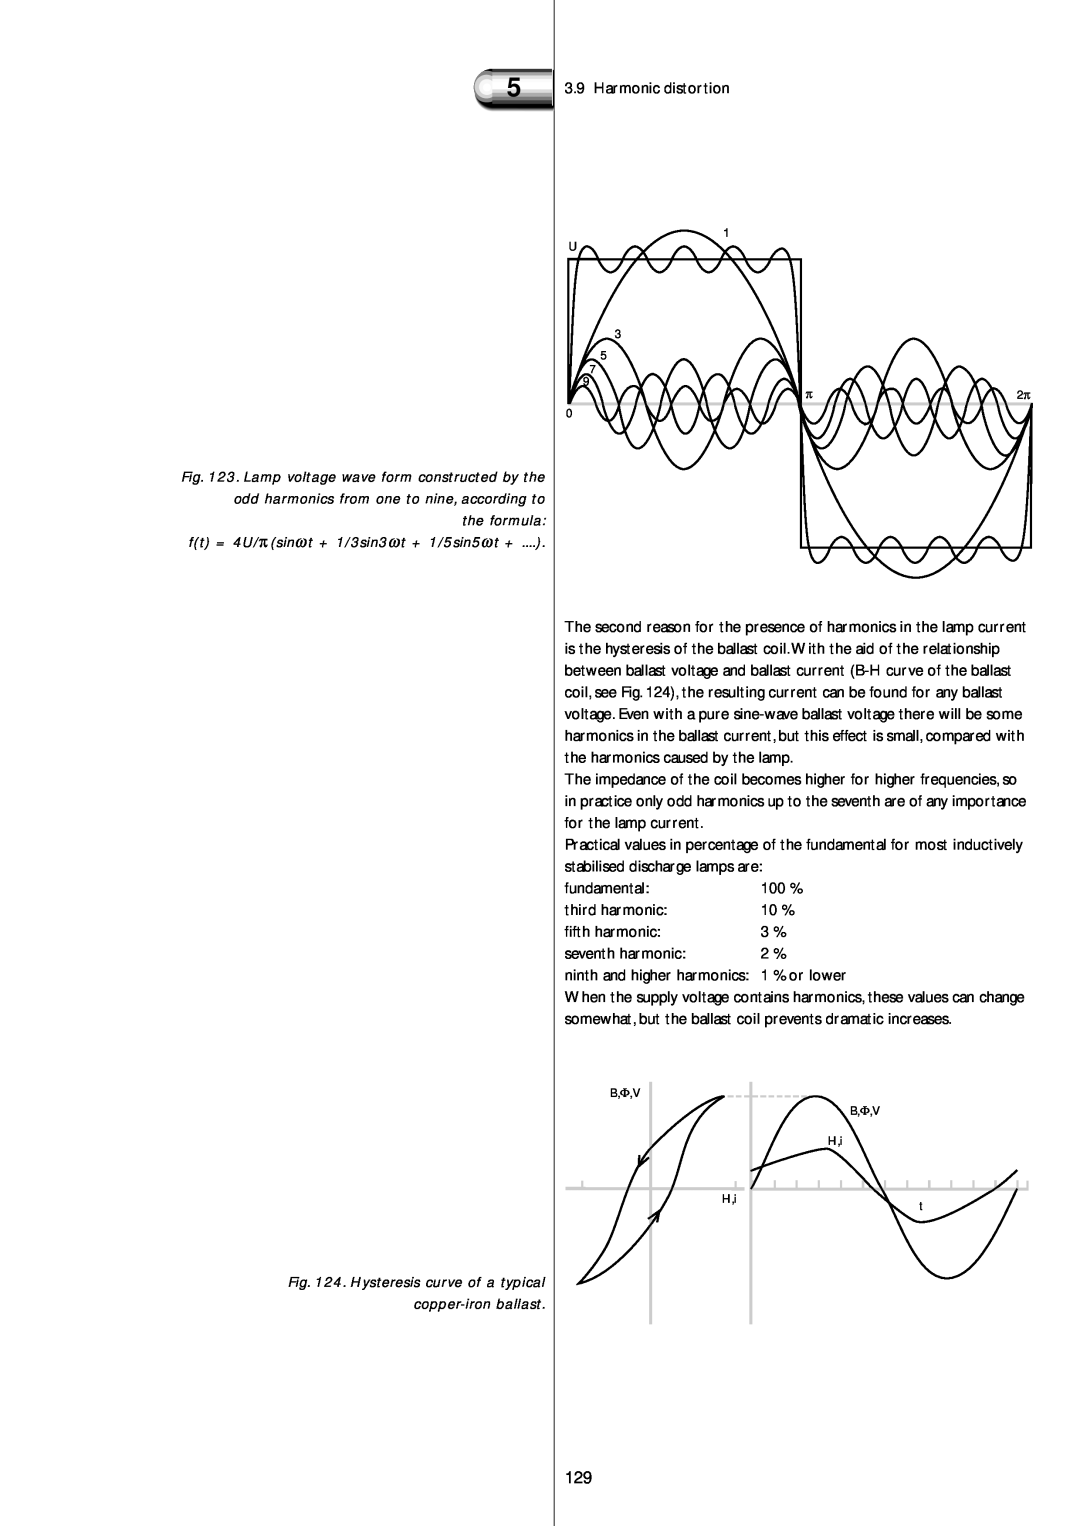 Philips Electromagnetic Lamp manual ft = 4U/π sinω t + 1/3sin3ω t + 1/5sin5ω t +, Harmonic distortion 